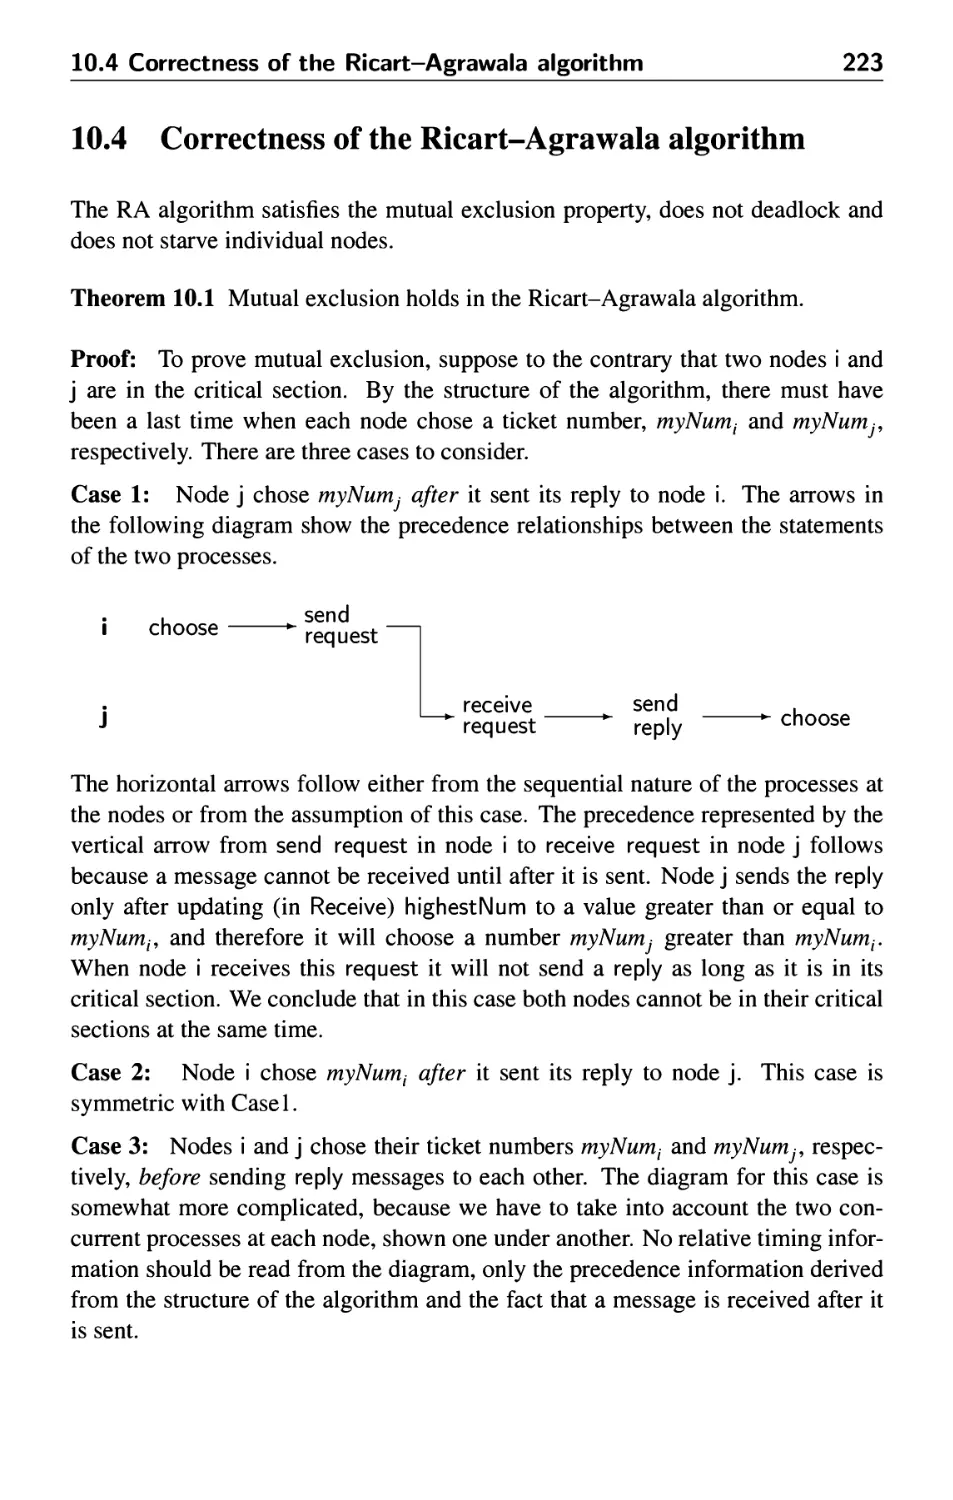 10.4 Correctness of the Ricart-Agrawala algorithm